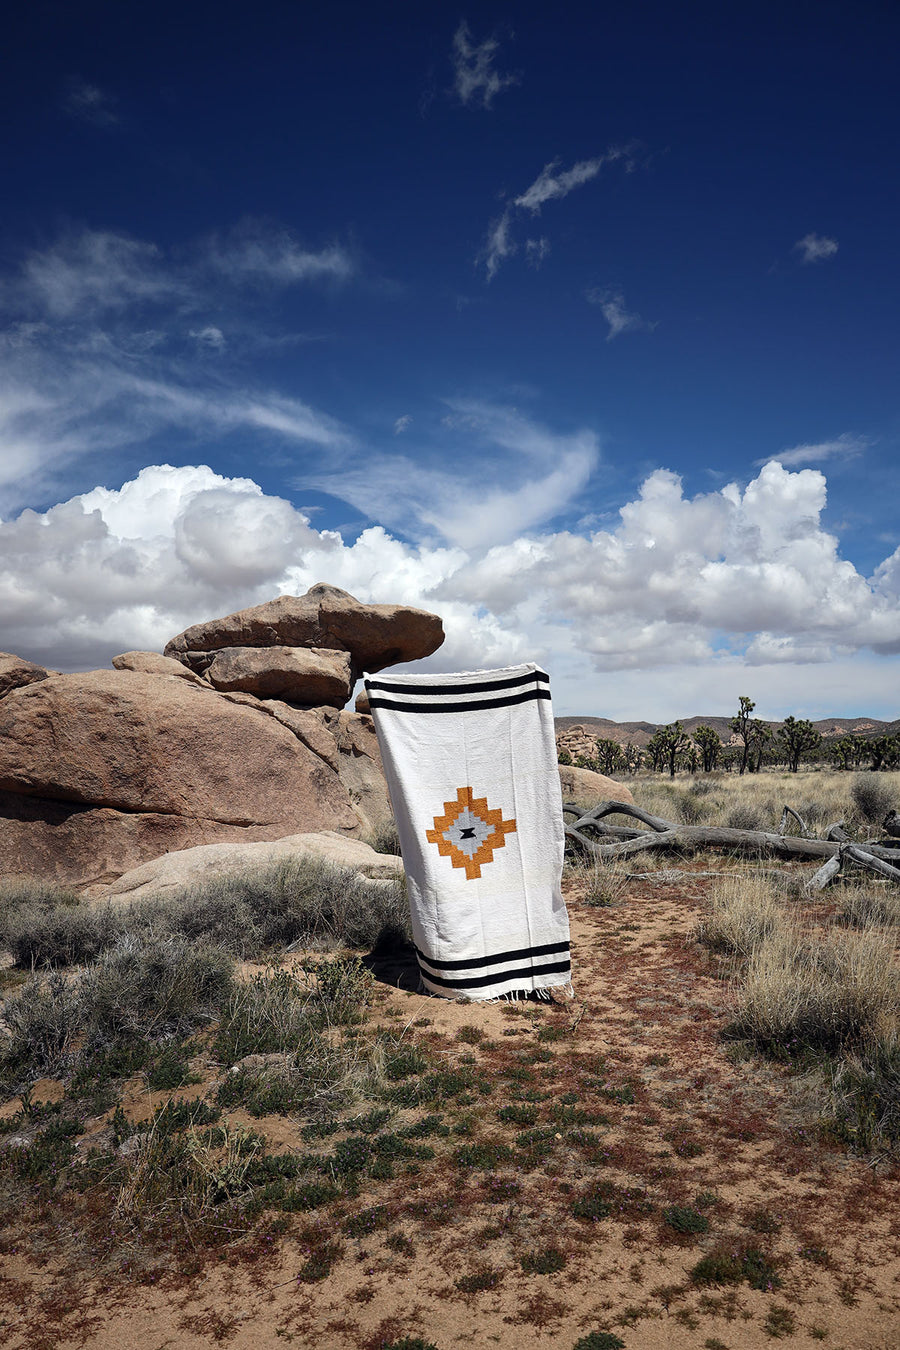 Taos Two (Canyon ) // Handwoven Blanket